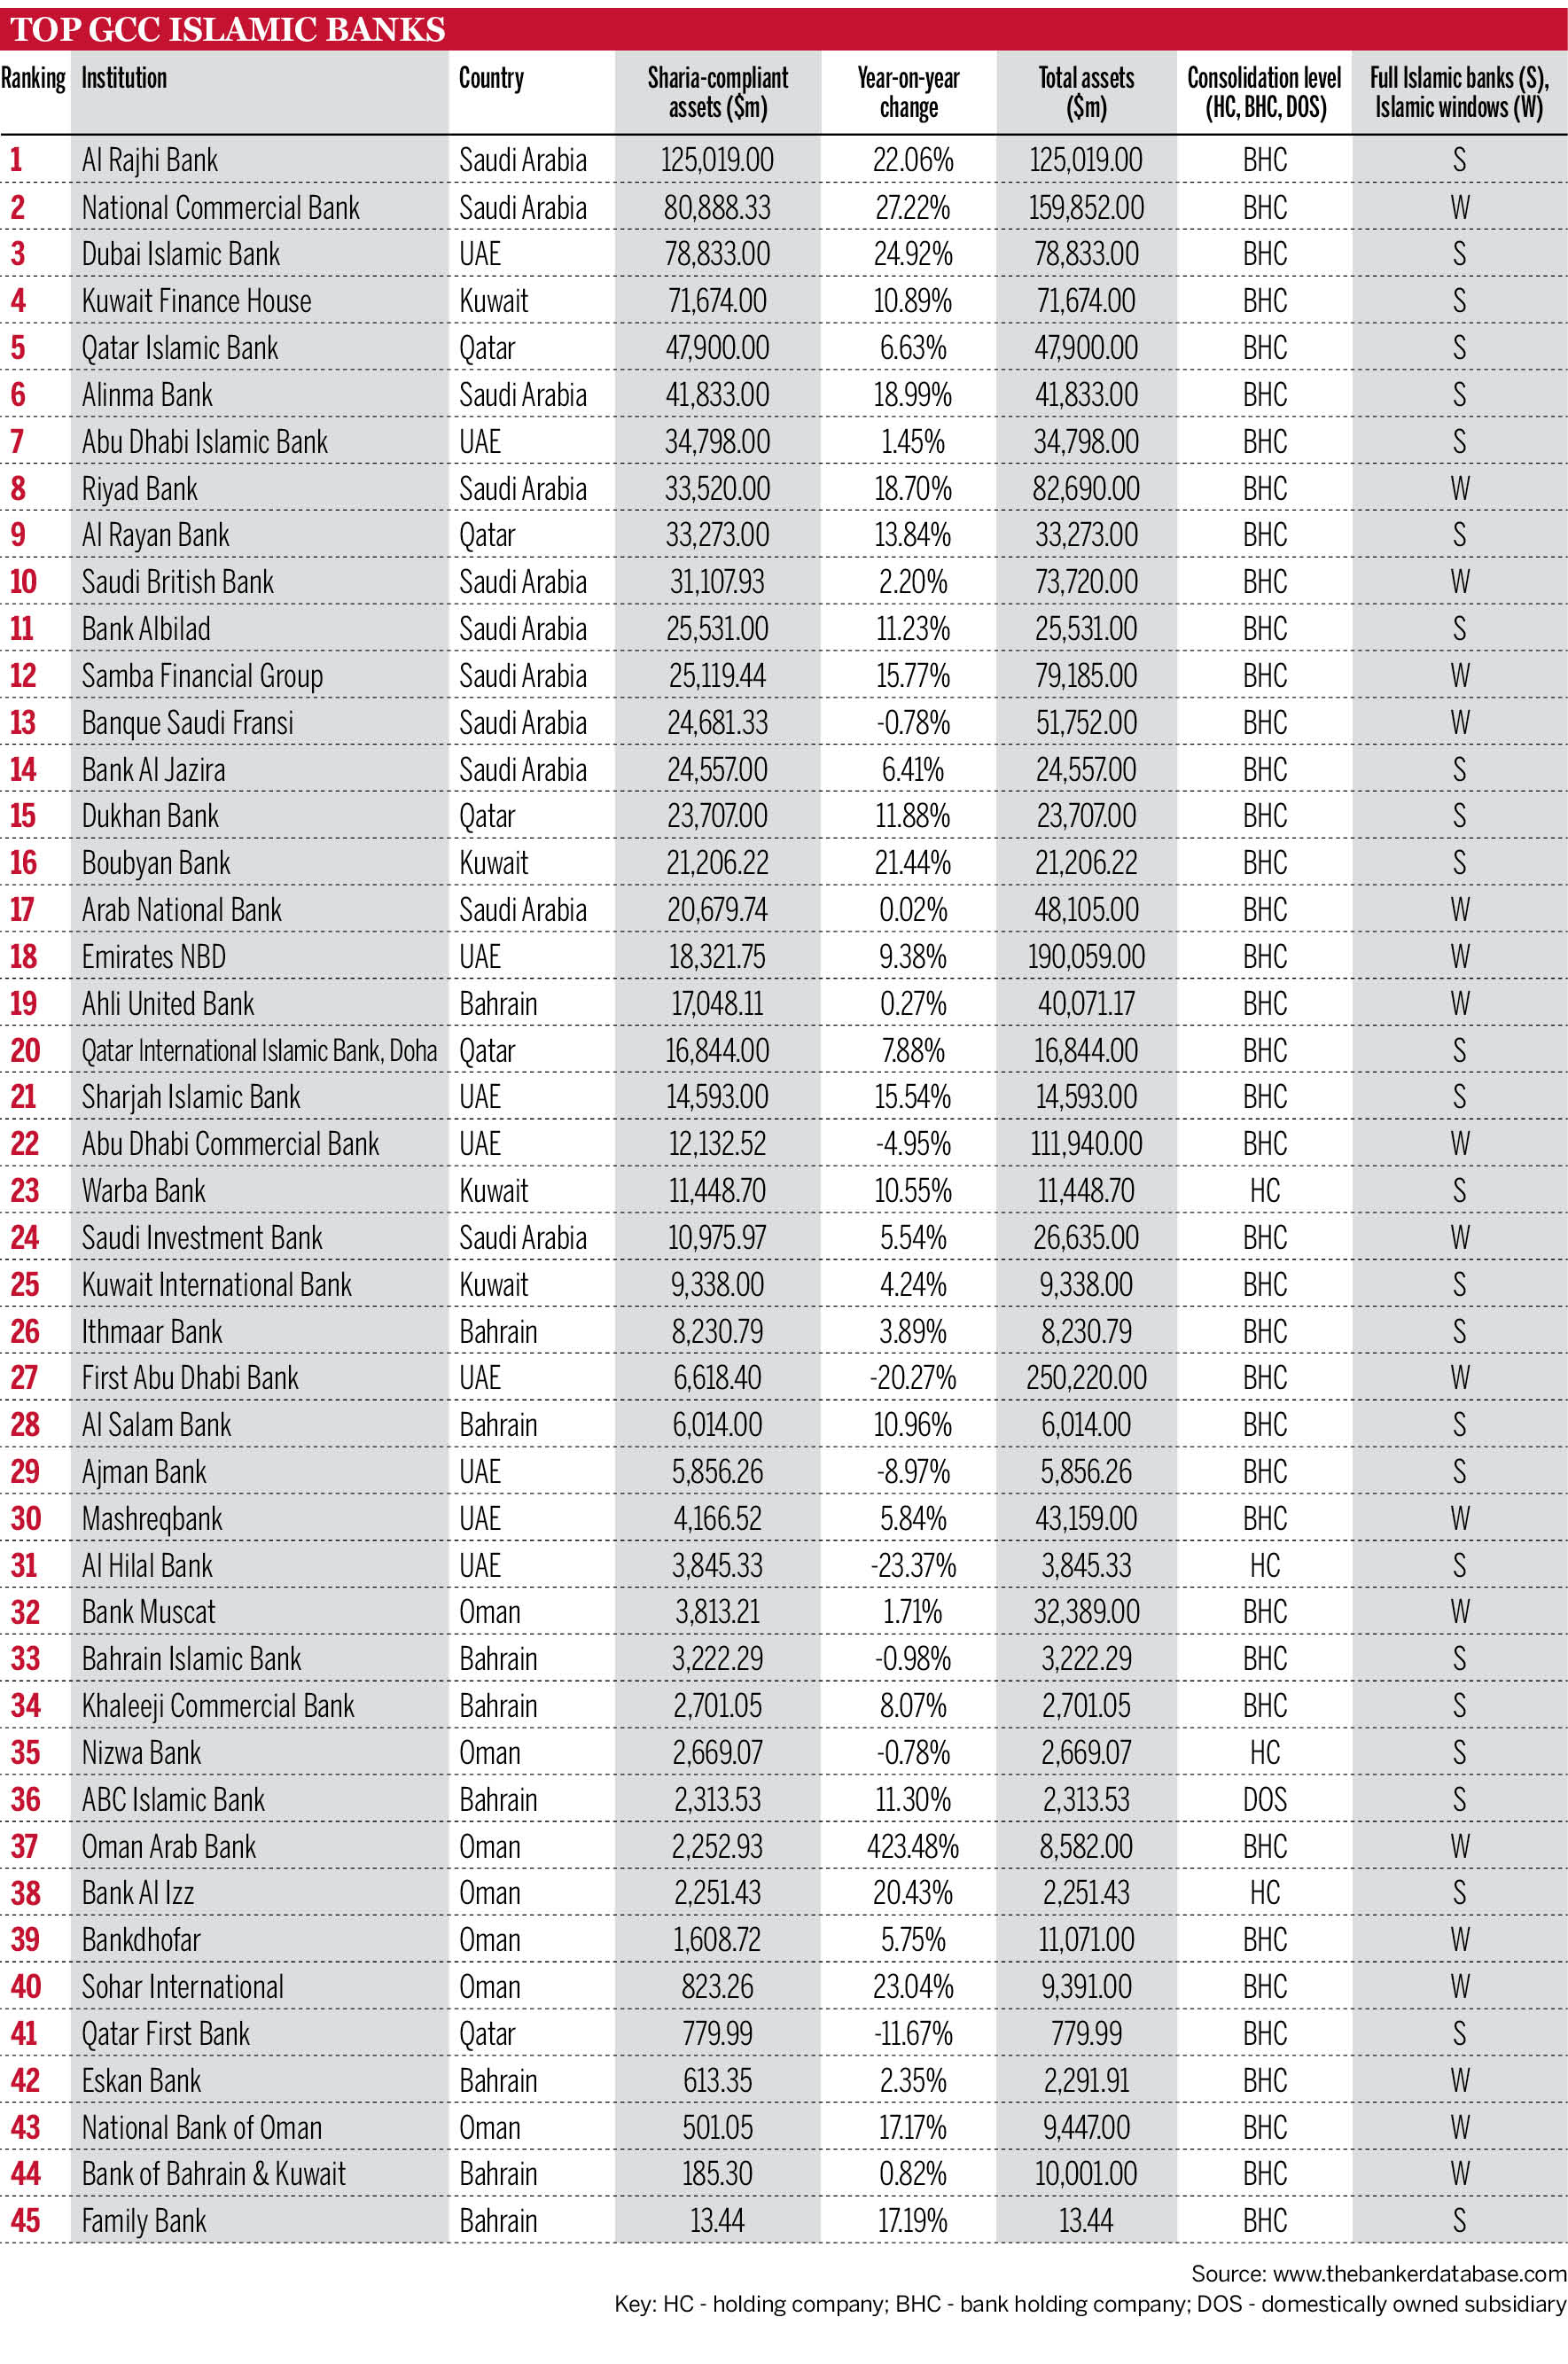 GCC rankings top 45